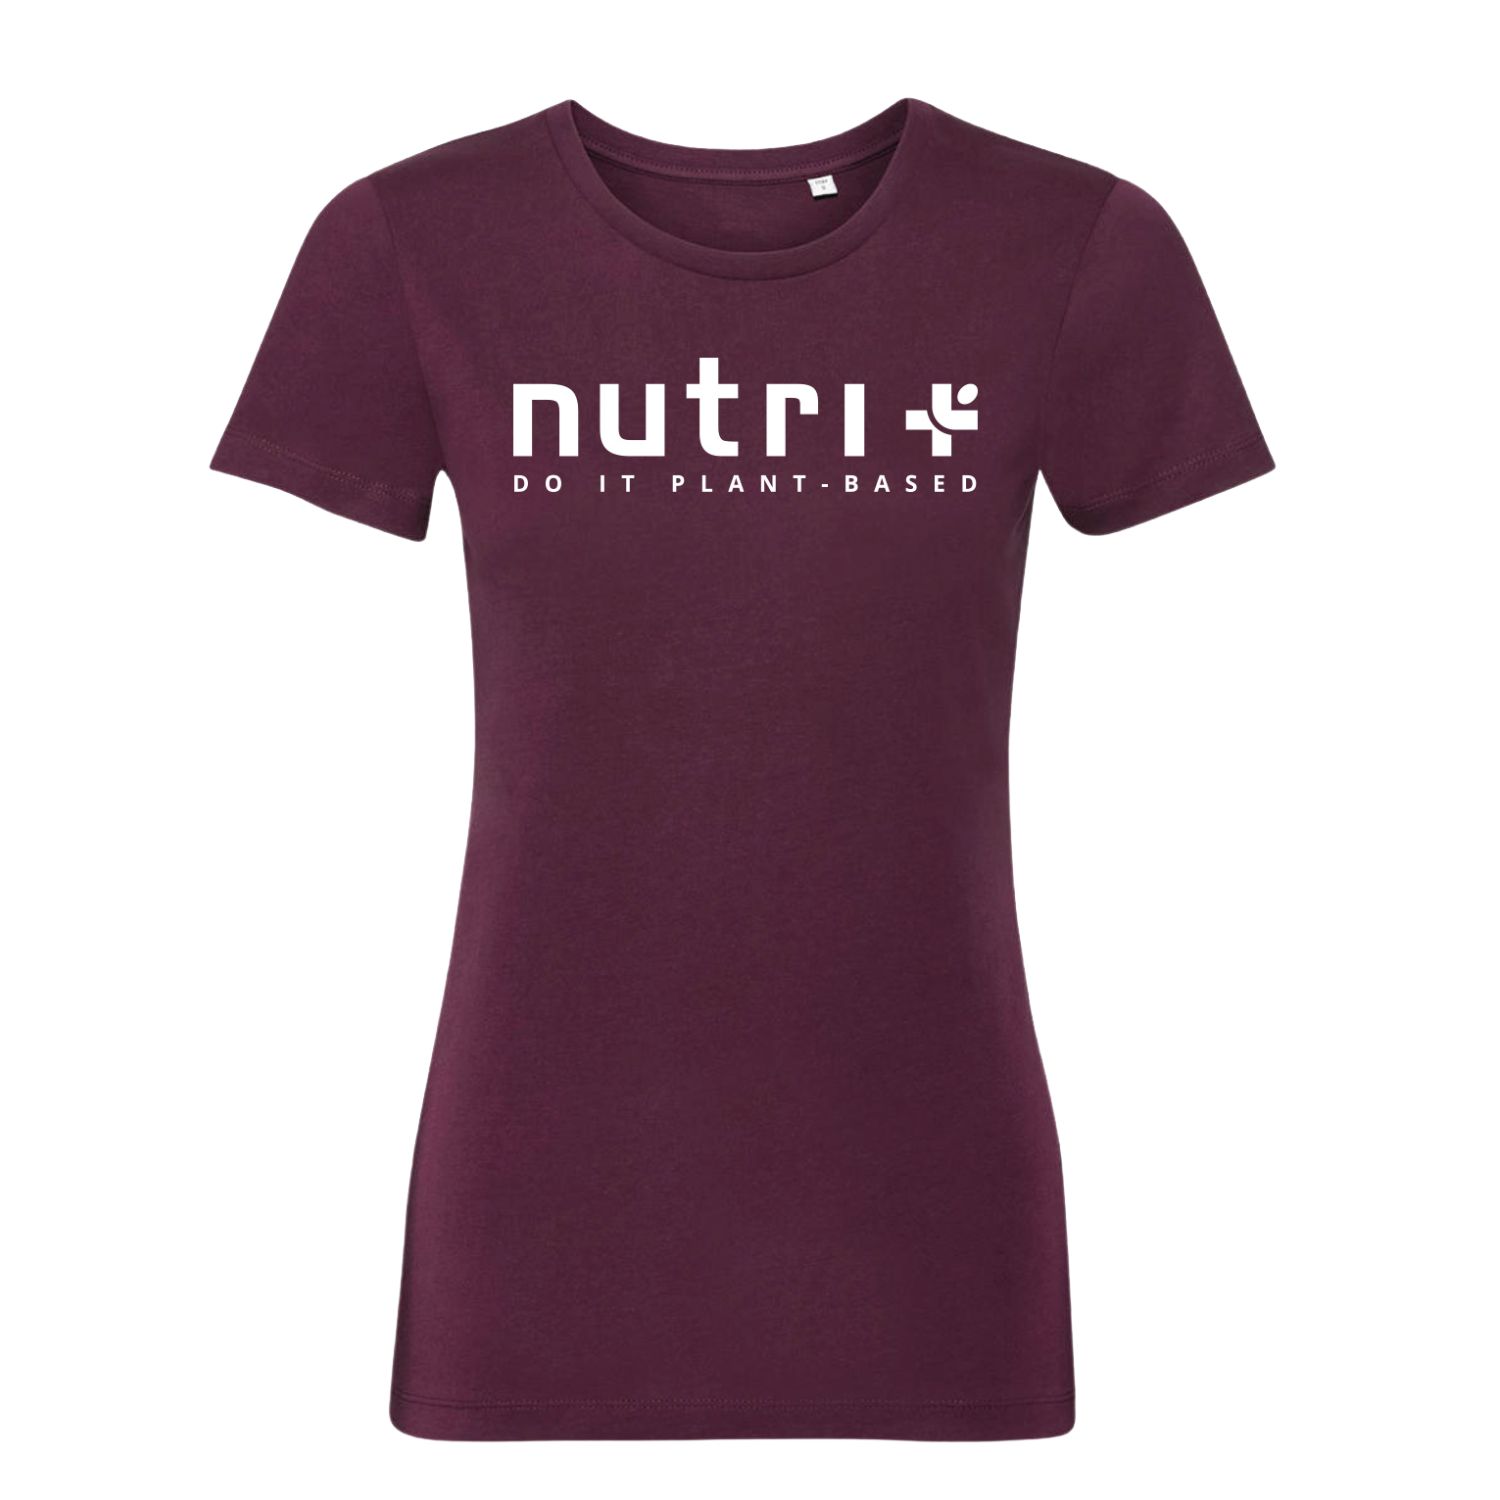 Team nutri+ Women's T-Shirt